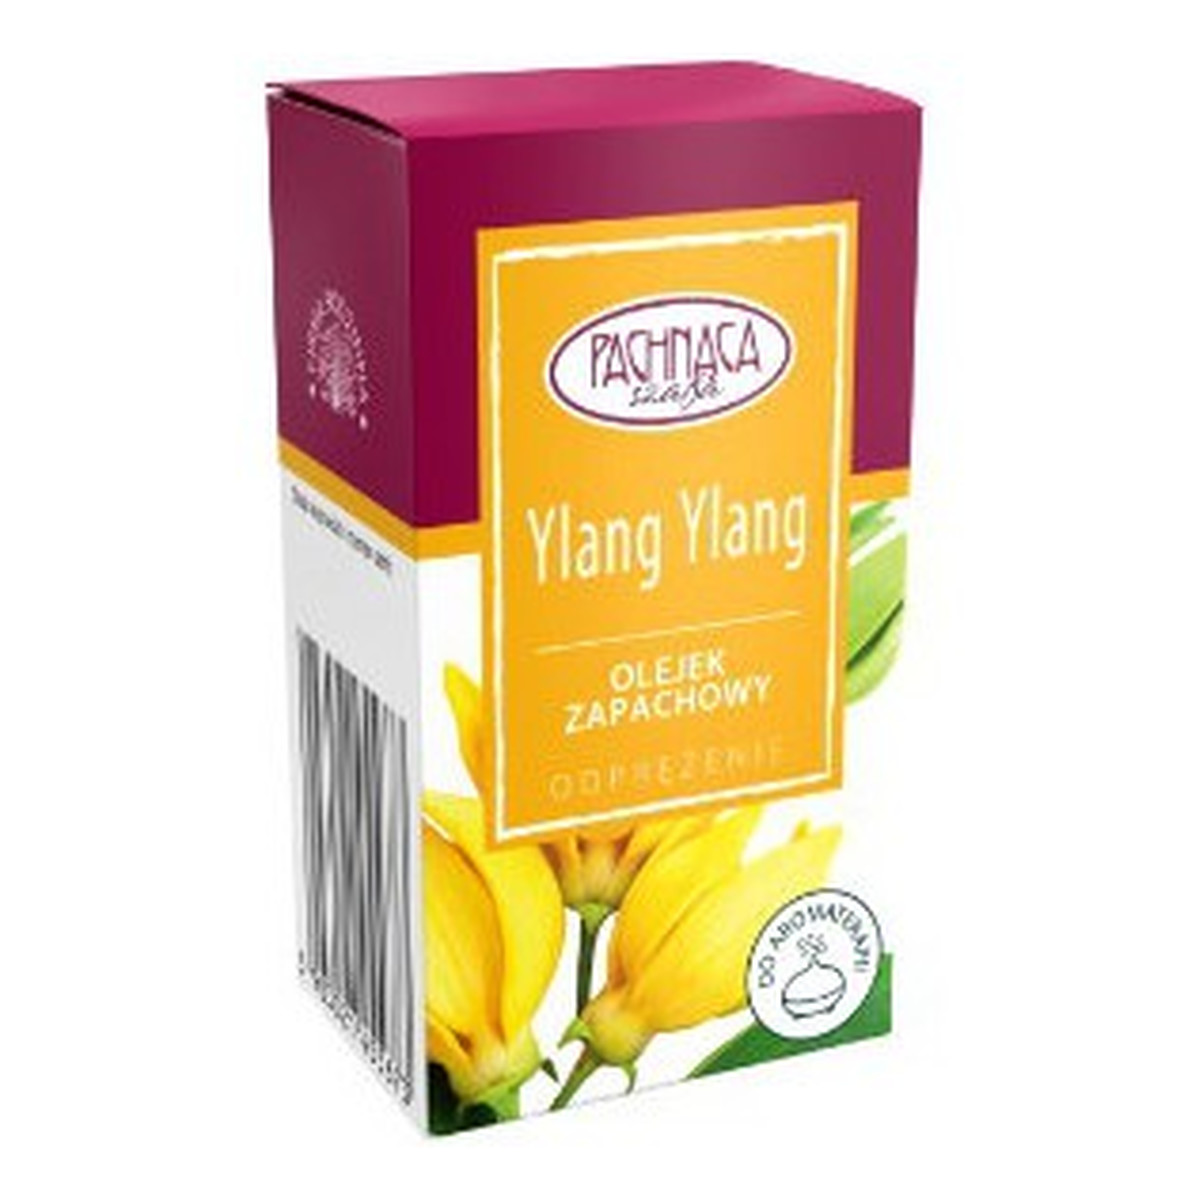 Pachnąca Szafa Olejek zapachowy Ylang Ylang 10ml